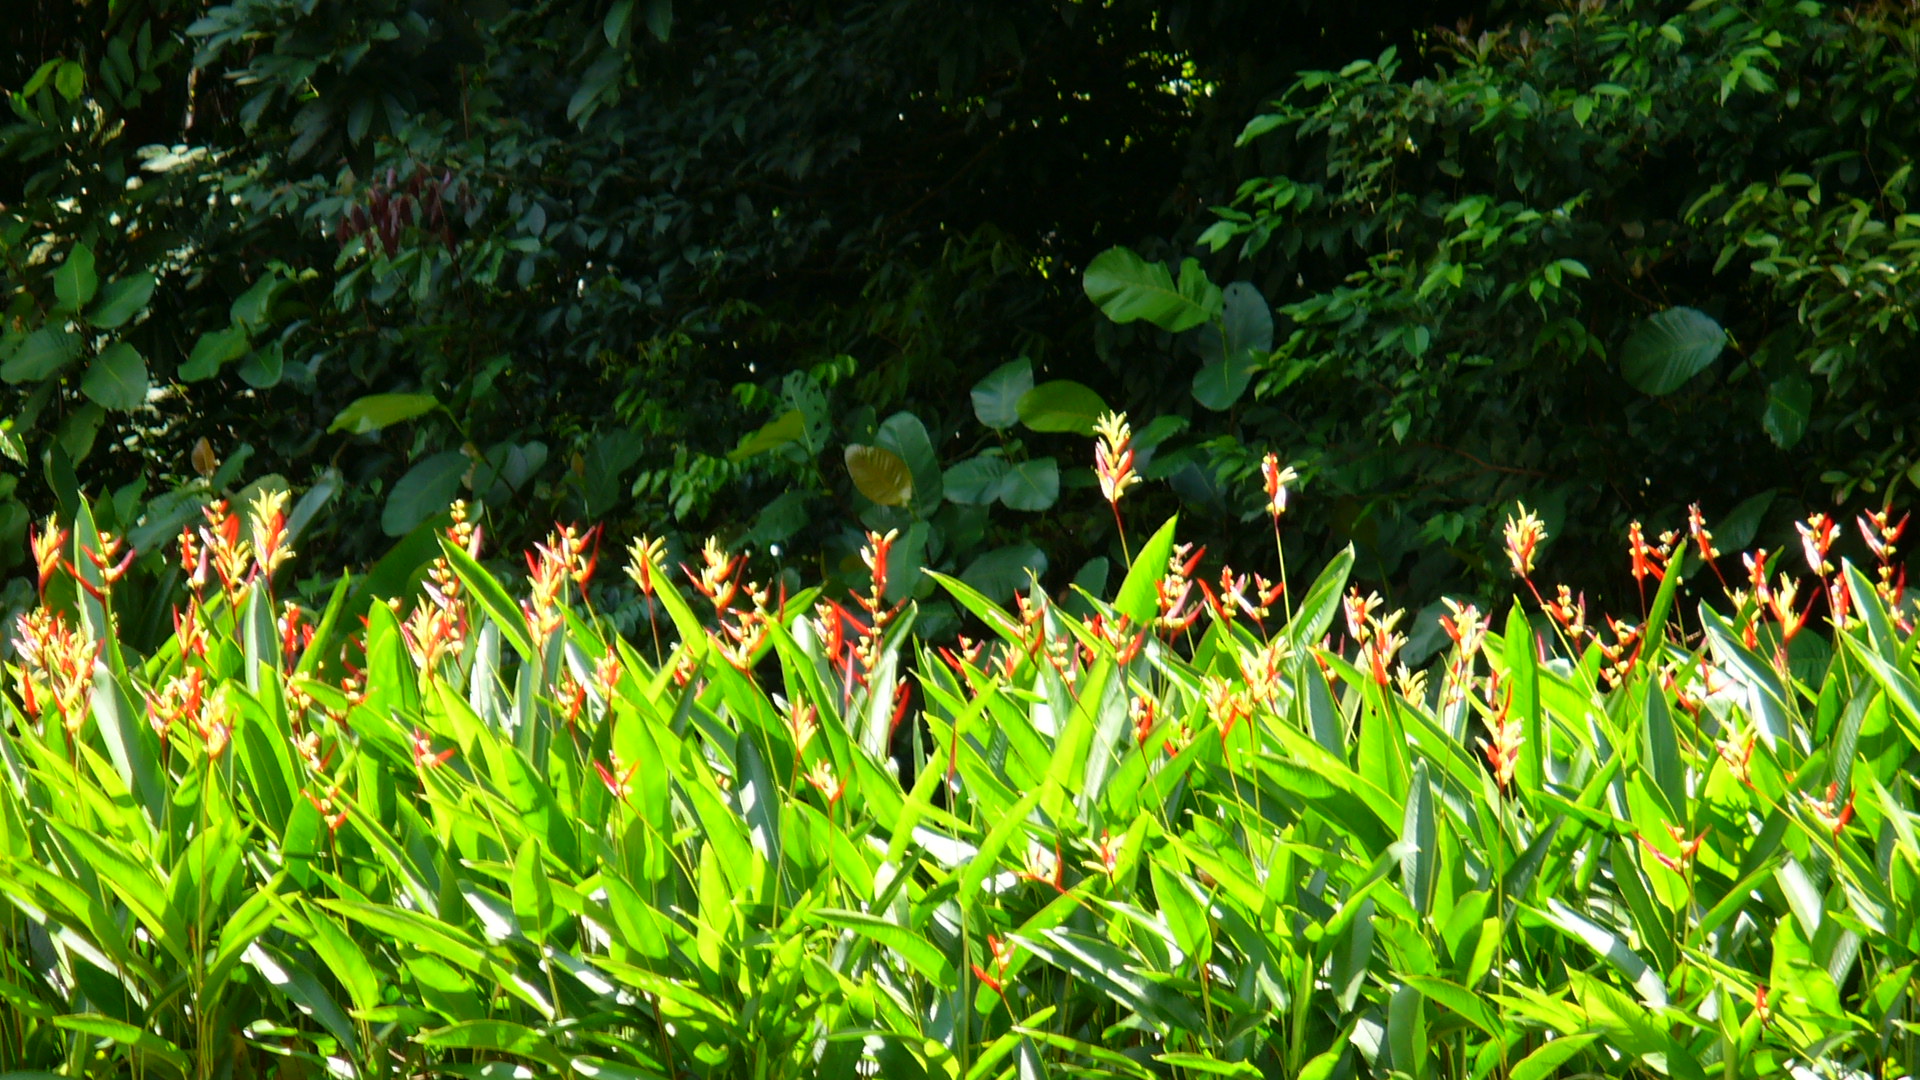 Flowers in Bloom - Singapore Botanic Gardens